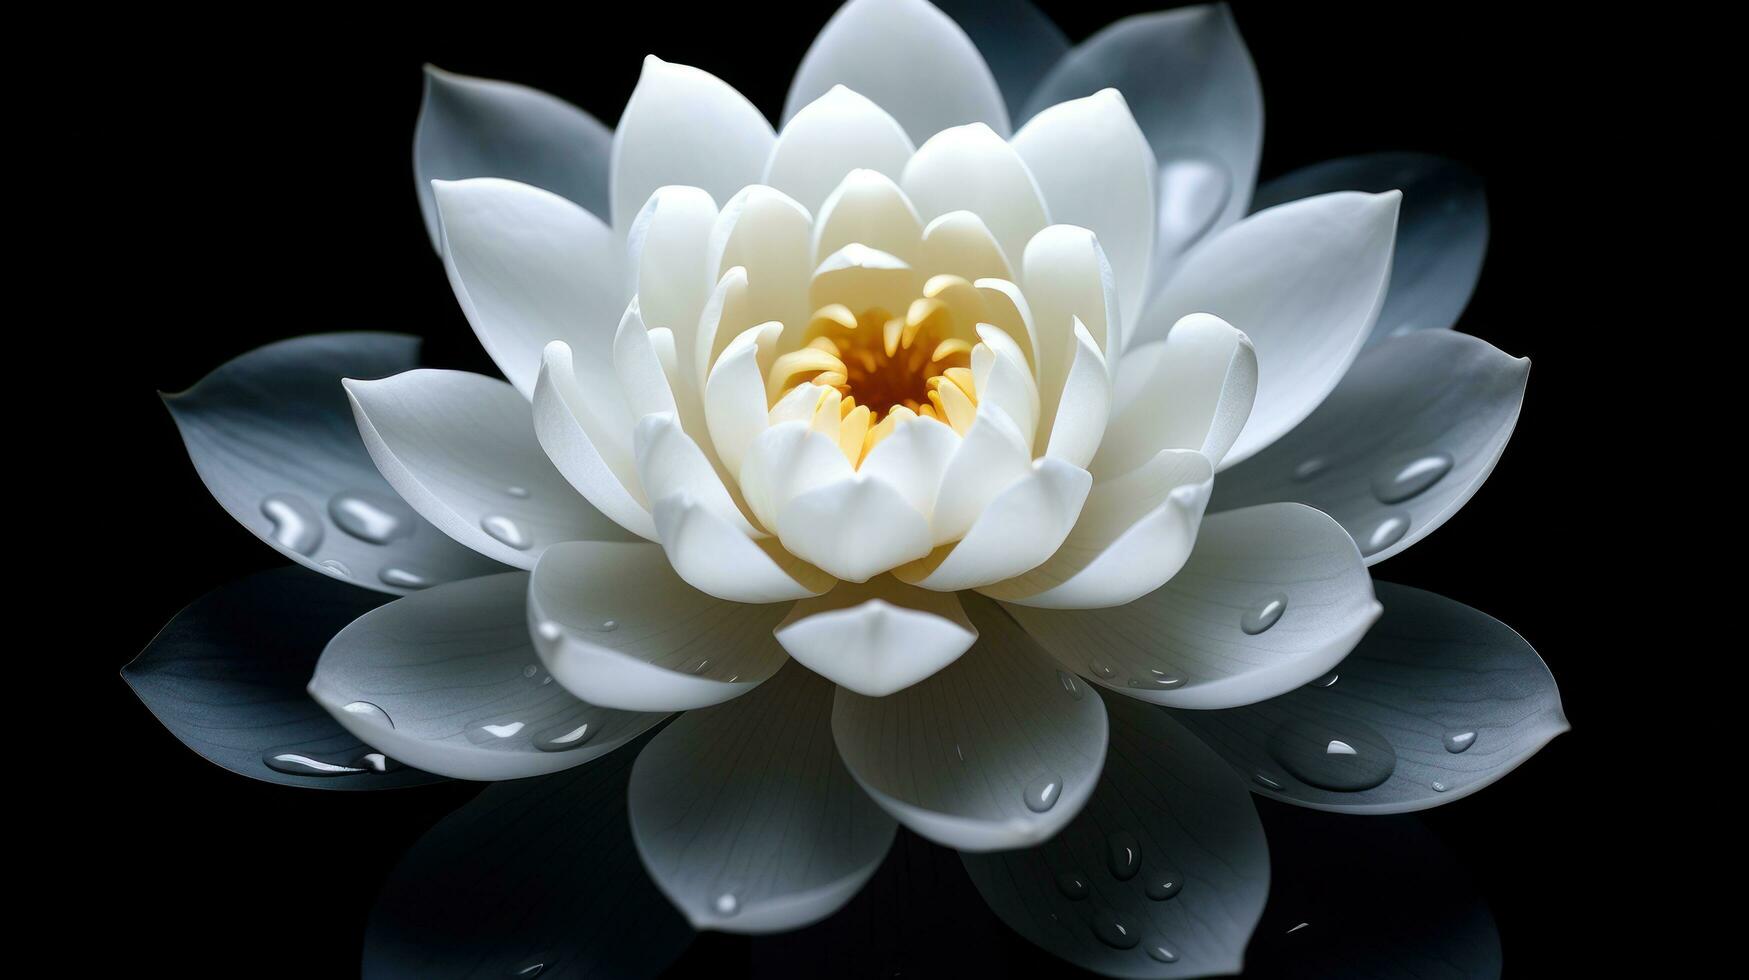 White lotus on black background photo